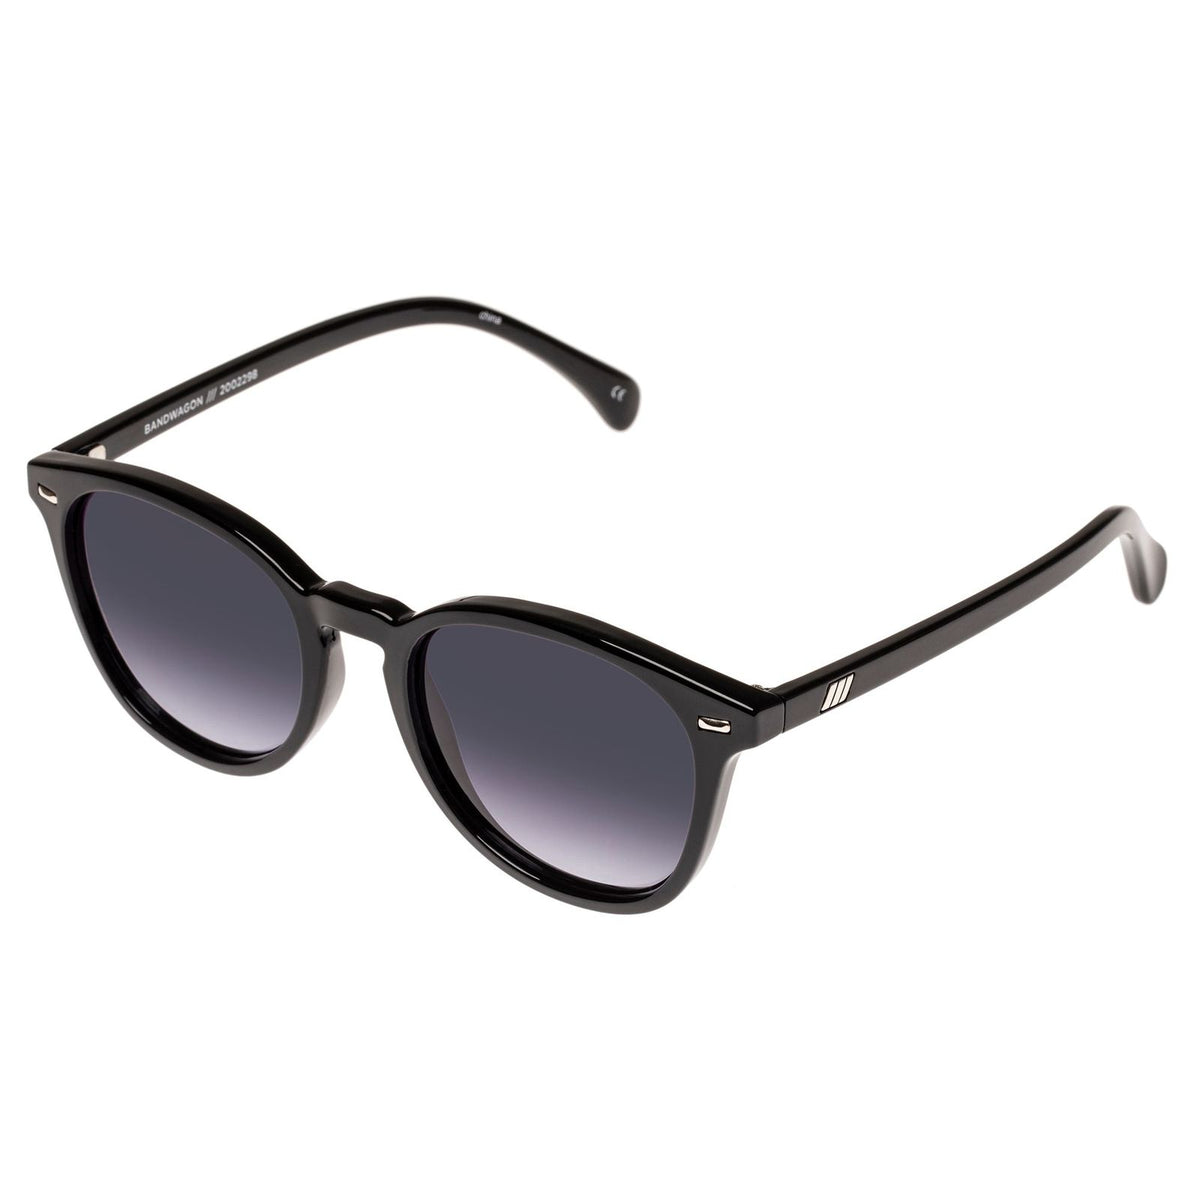 Le Specs - Band Wagon - Black Unisex Sunglasses